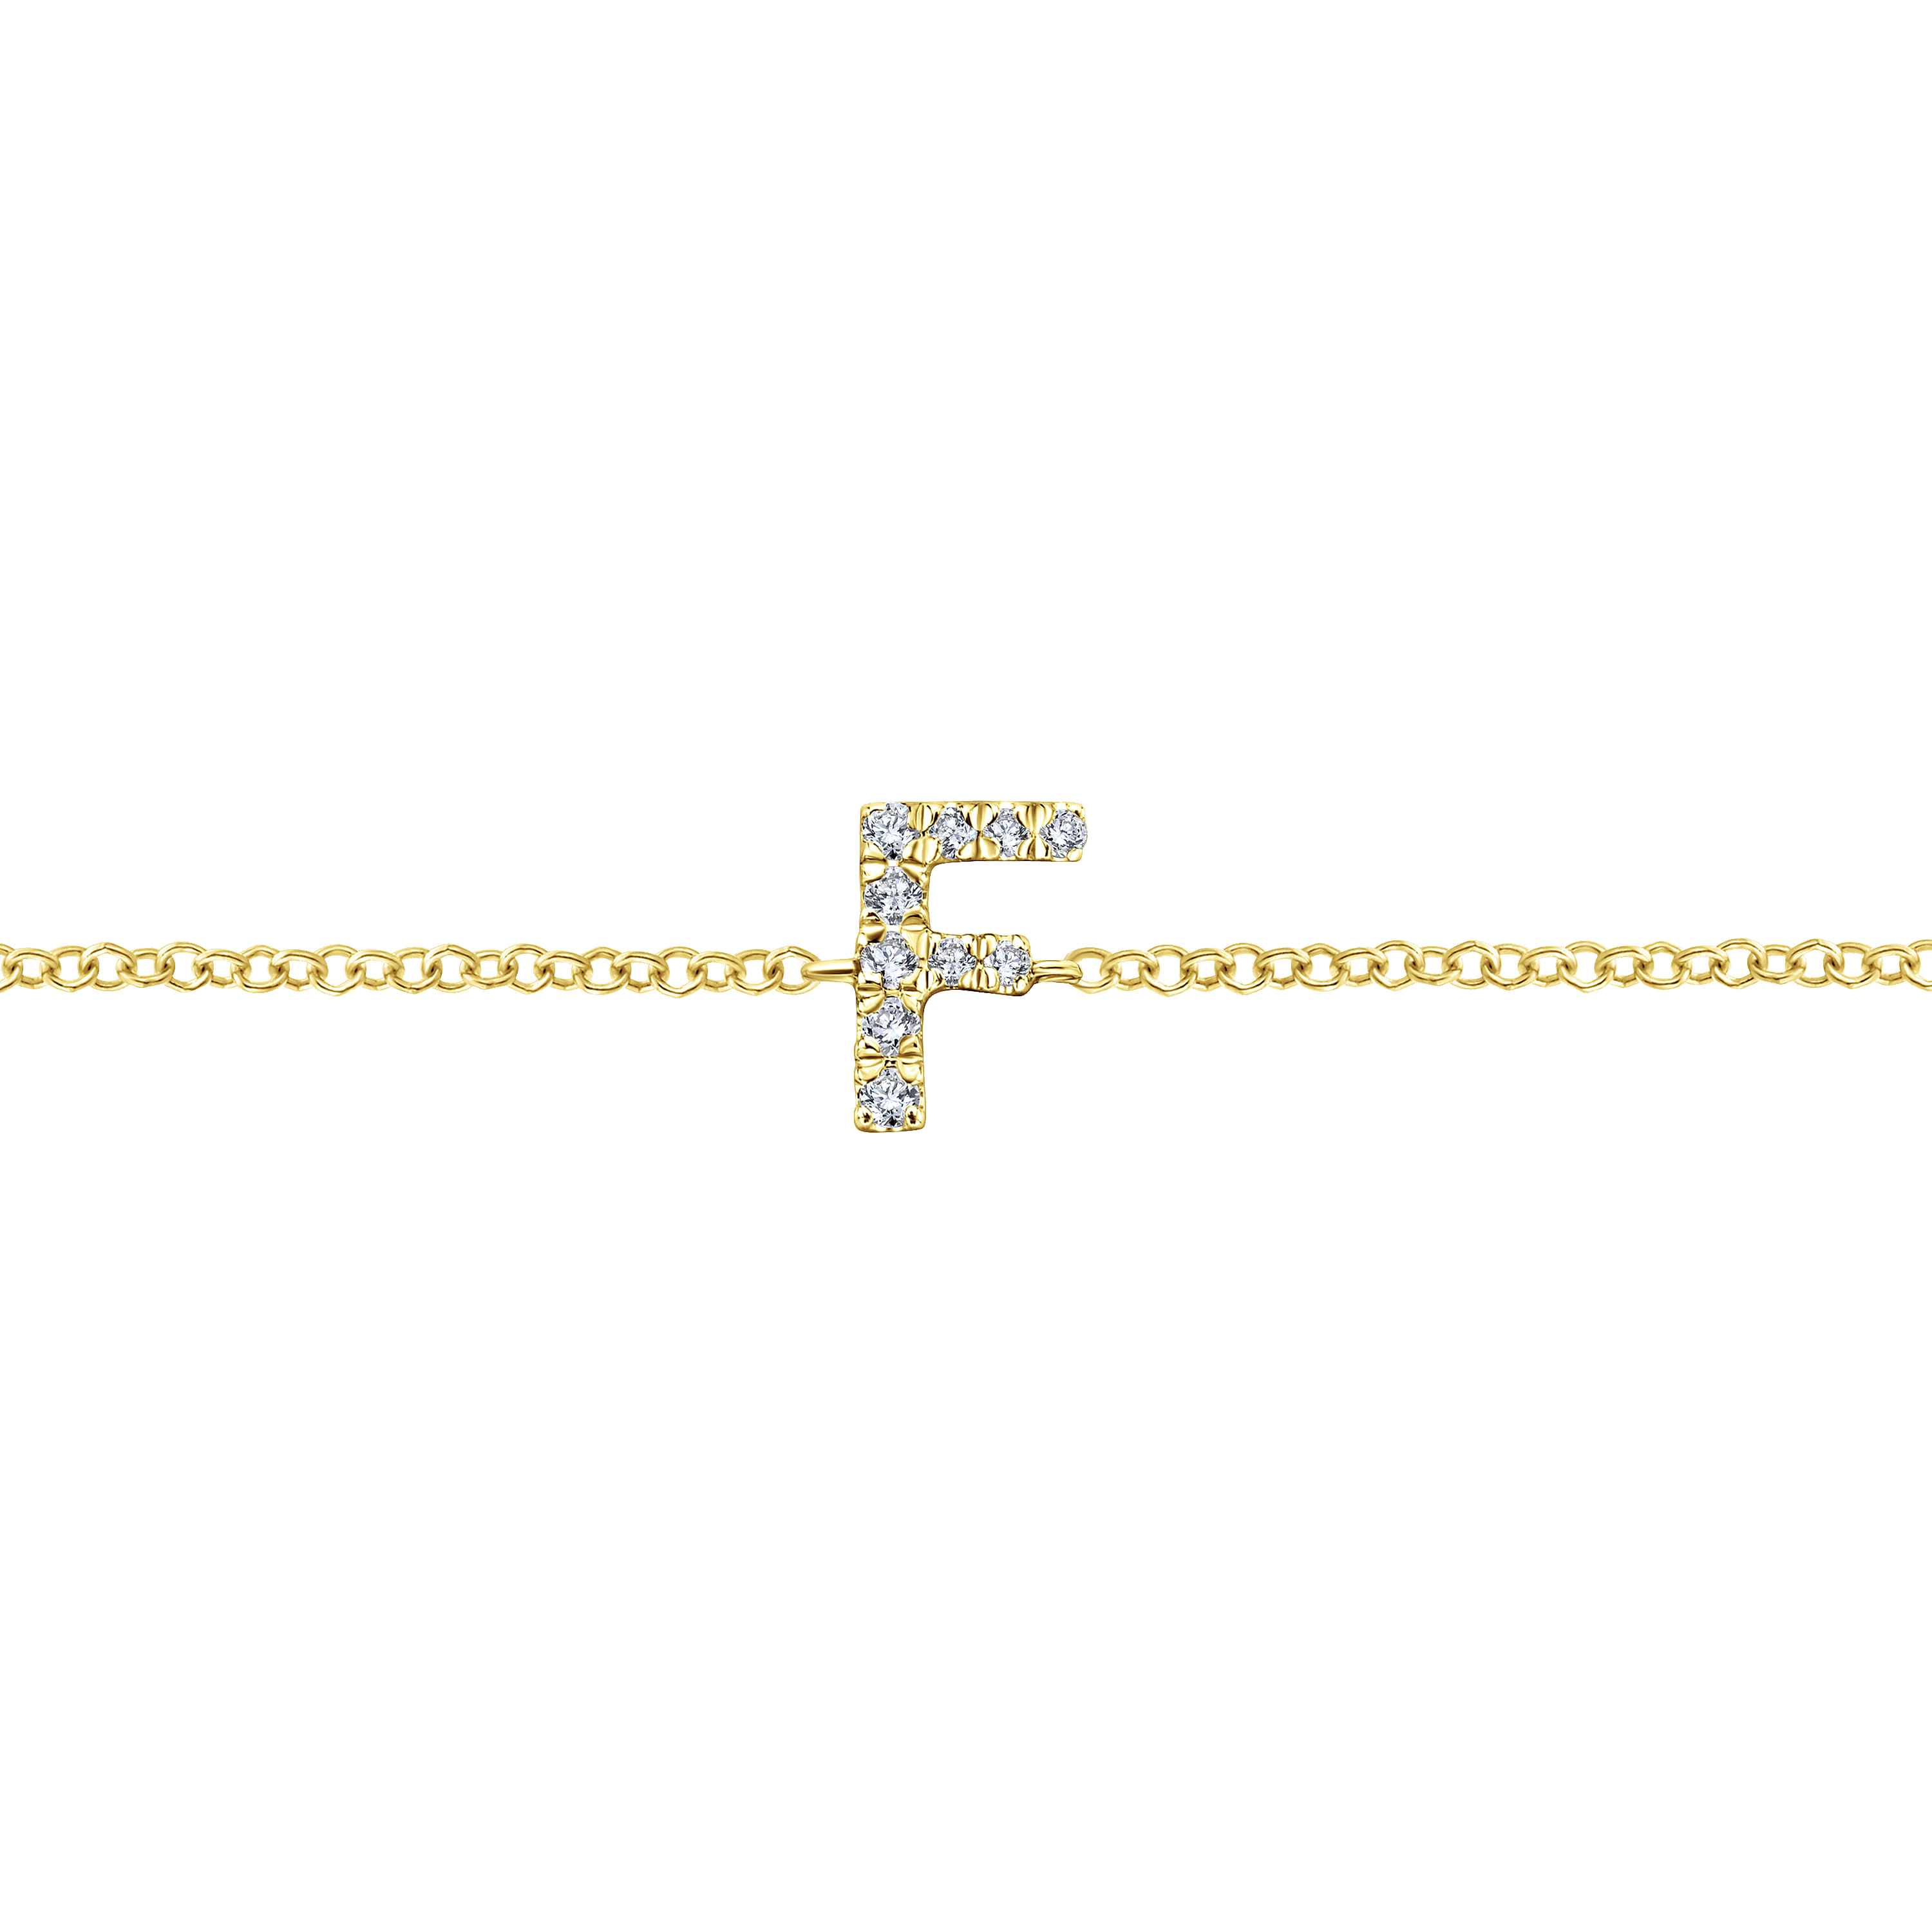 14K Yellow Gold Chain Bracelet with F Diamond Initial